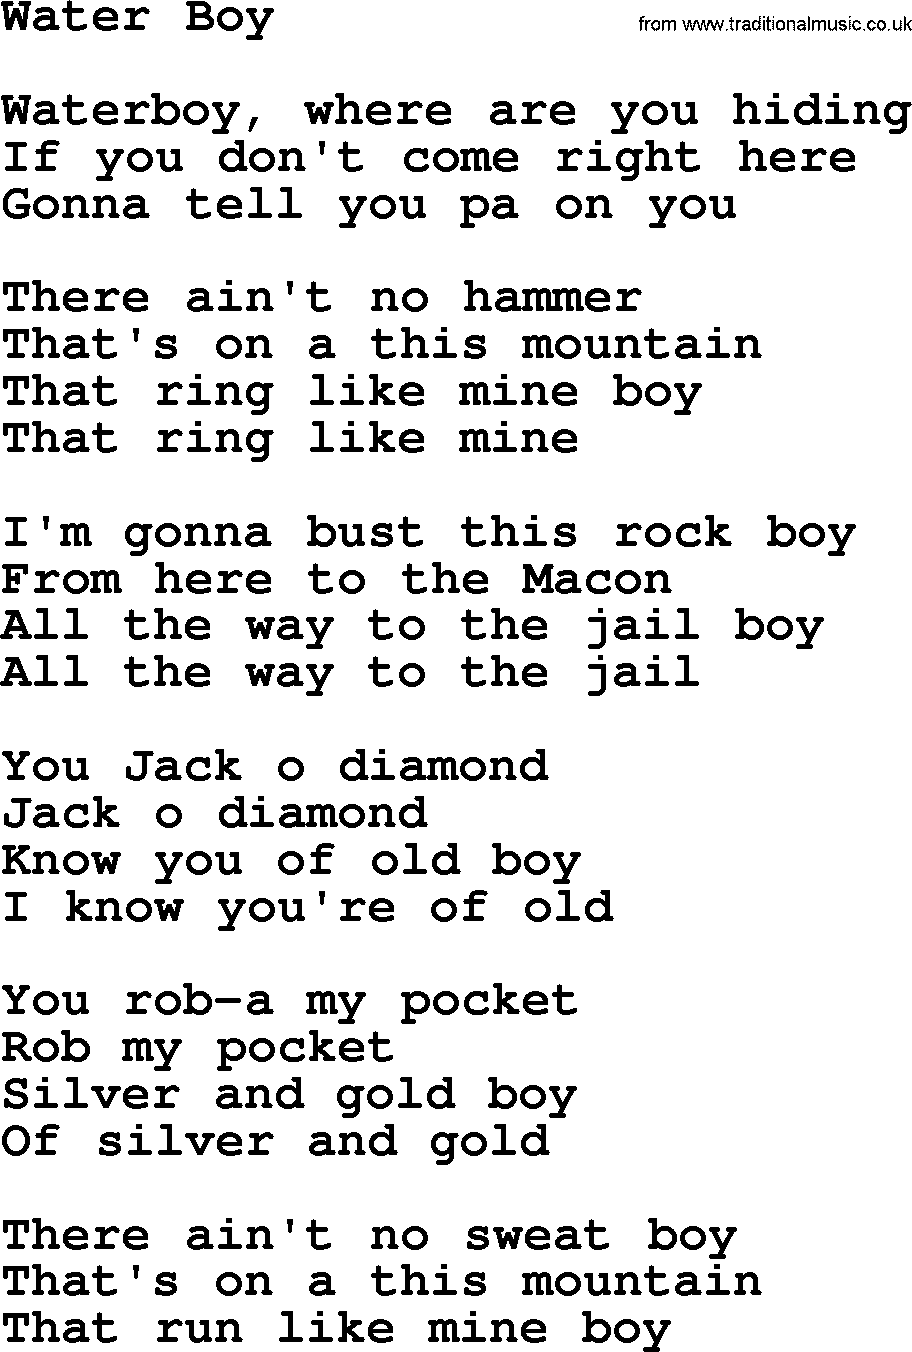 Joan Baez song Water Boy, lyrics